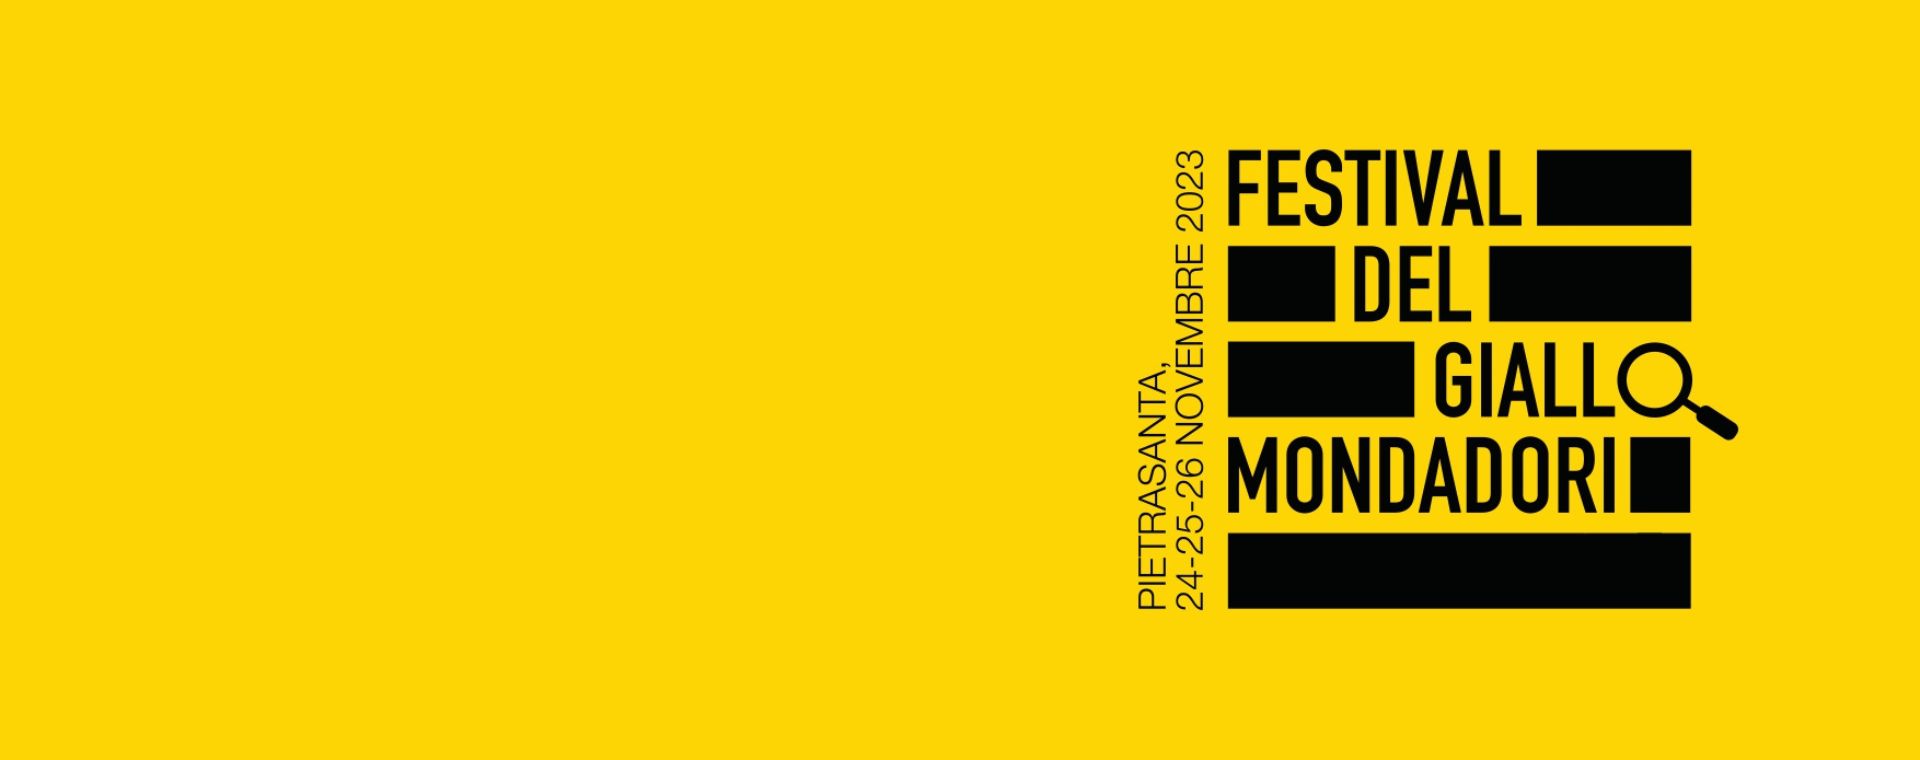 Mondadori Crime Film Festival, events not to be missed |  Mondadori Books